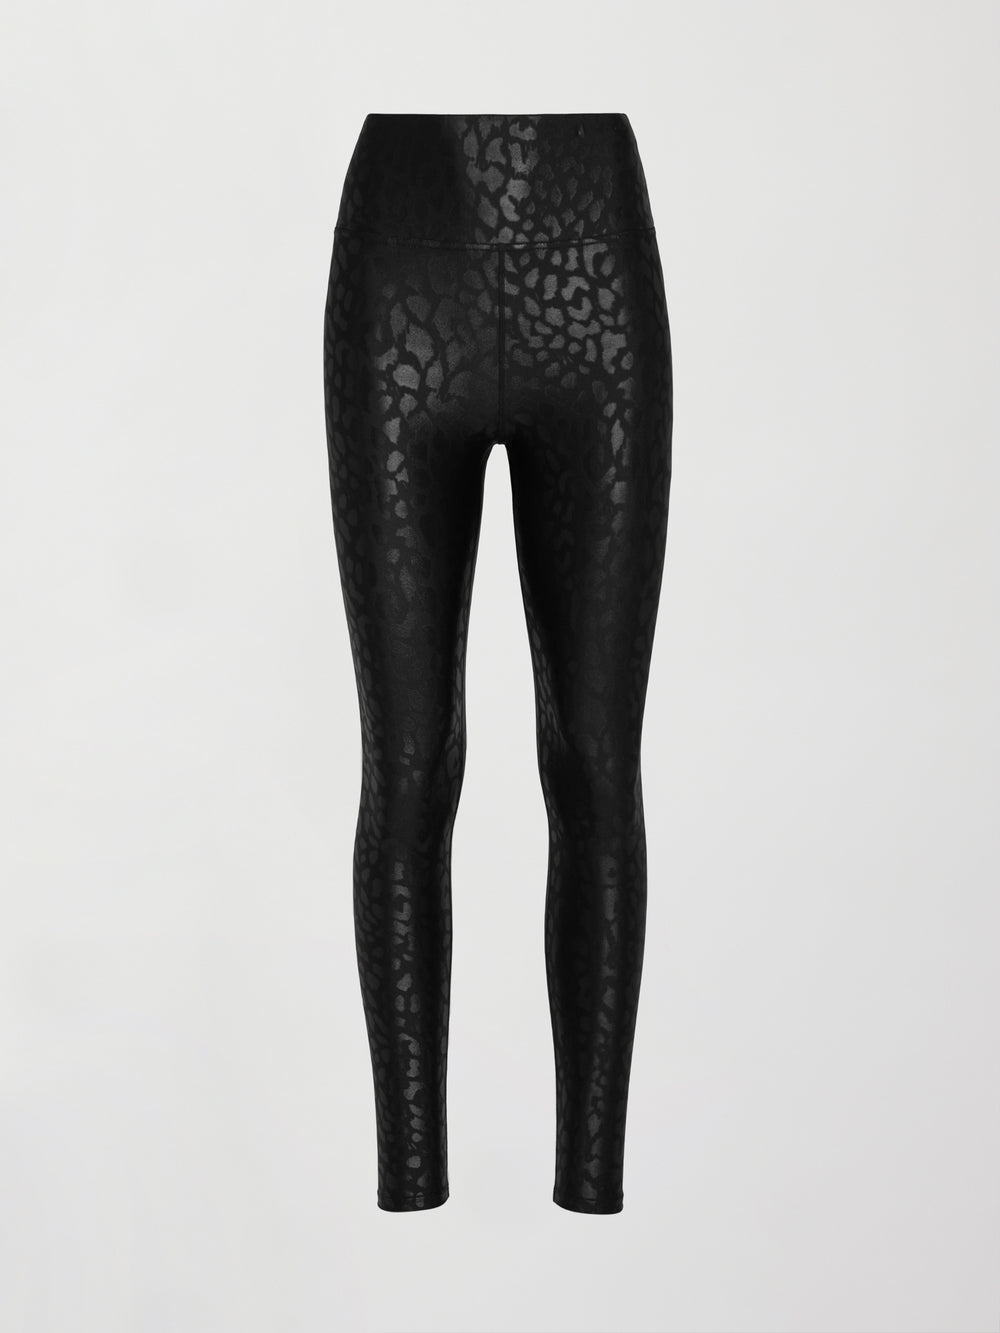 Carbon 38 Takara Shine High Waisted Leggings Shiny Athletic Size XS Black -  $45 - From Nadine